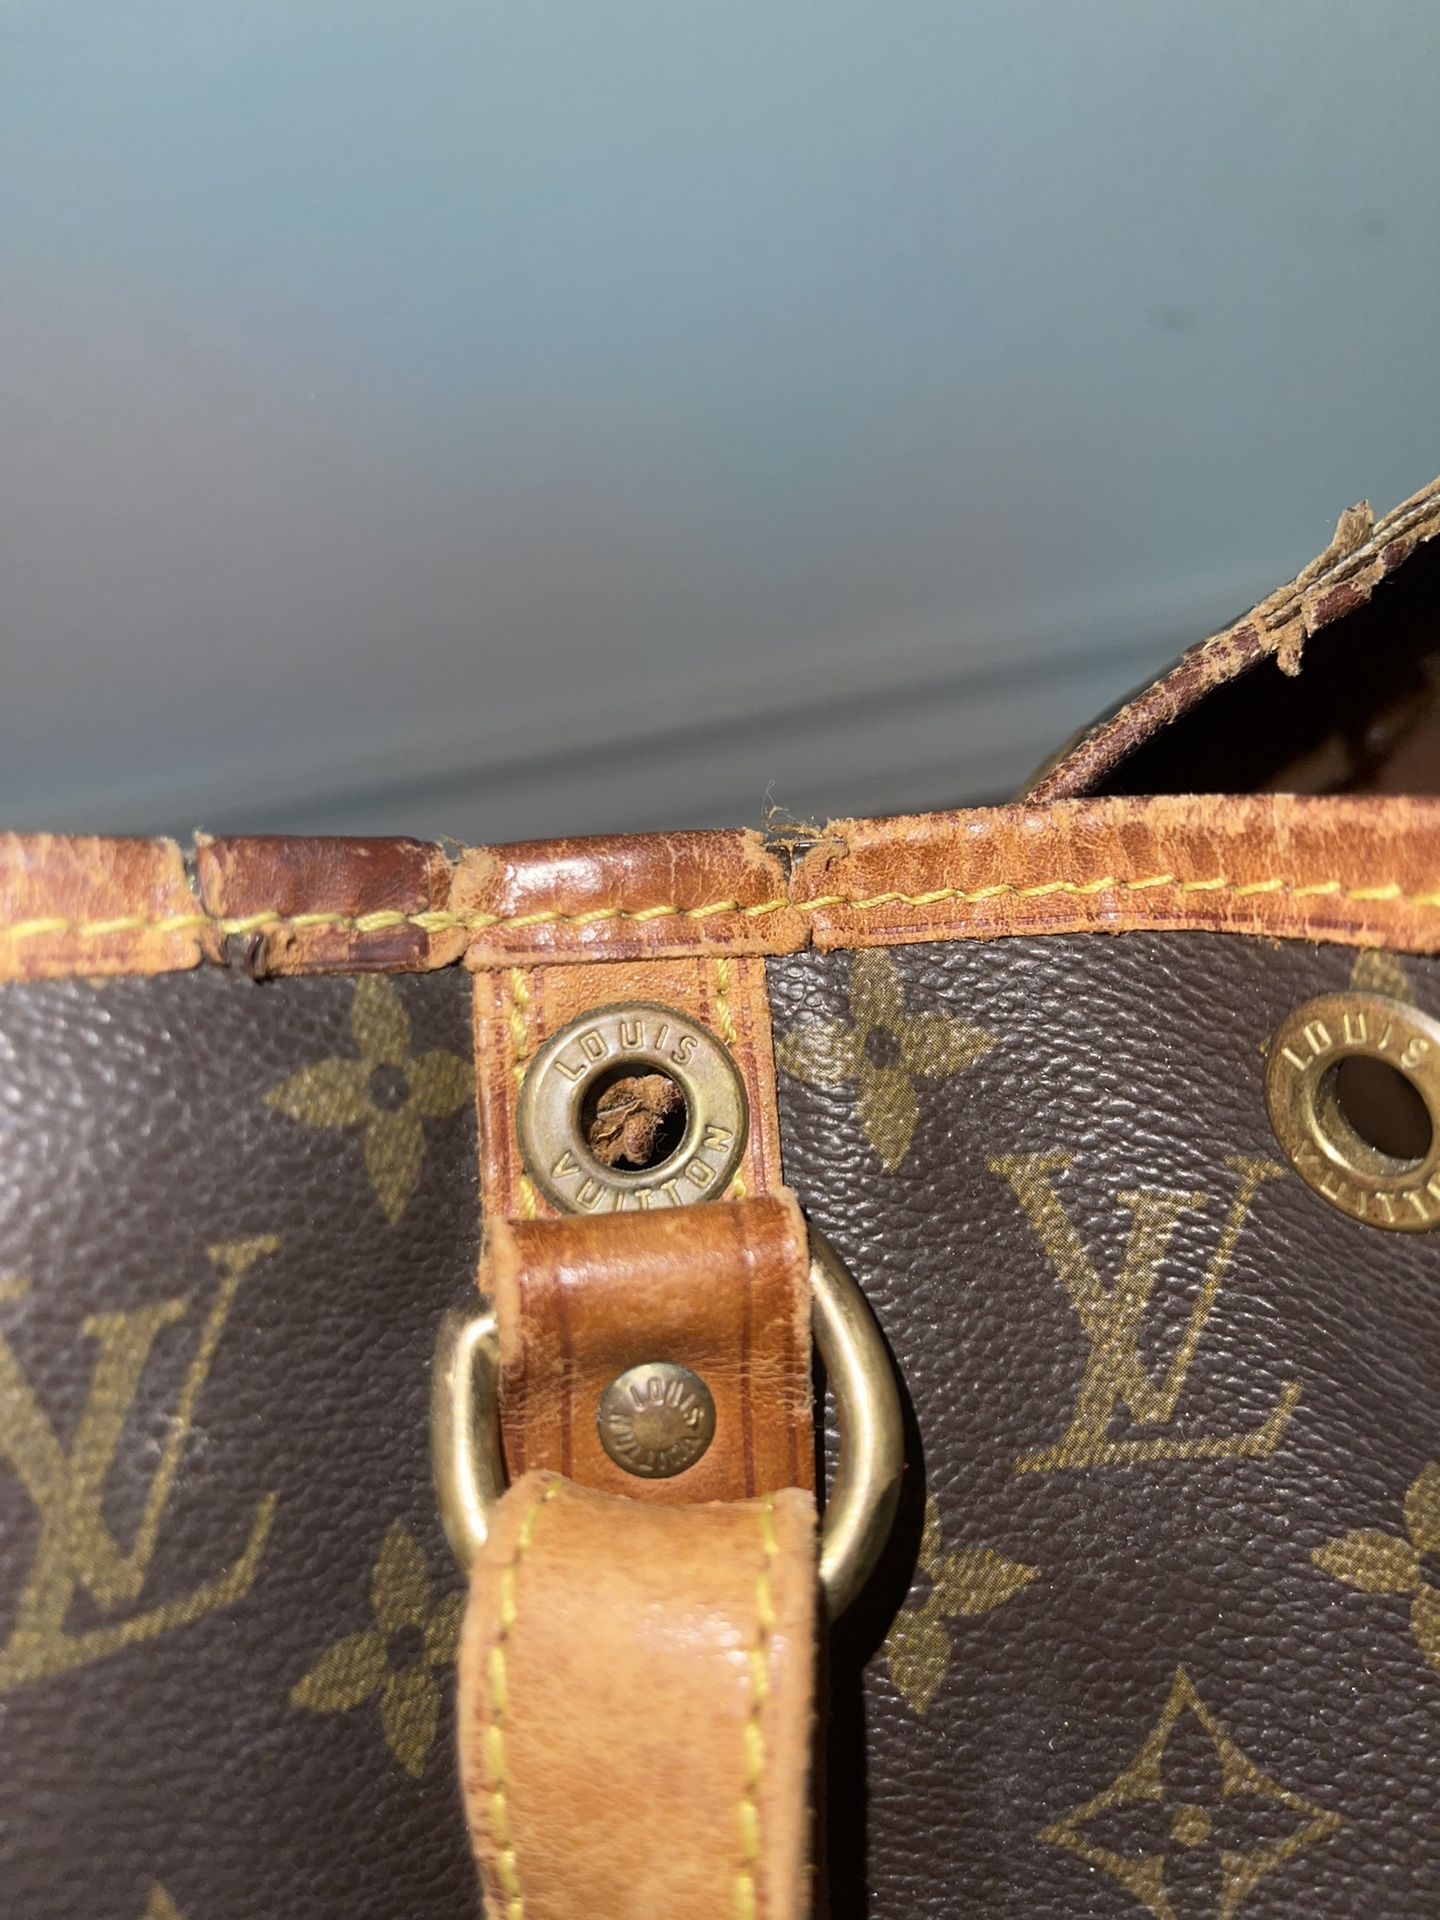 Louis Vuitton Petit Noe Drawstring Bag for Sale in Hillsboro, OR - OfferUp